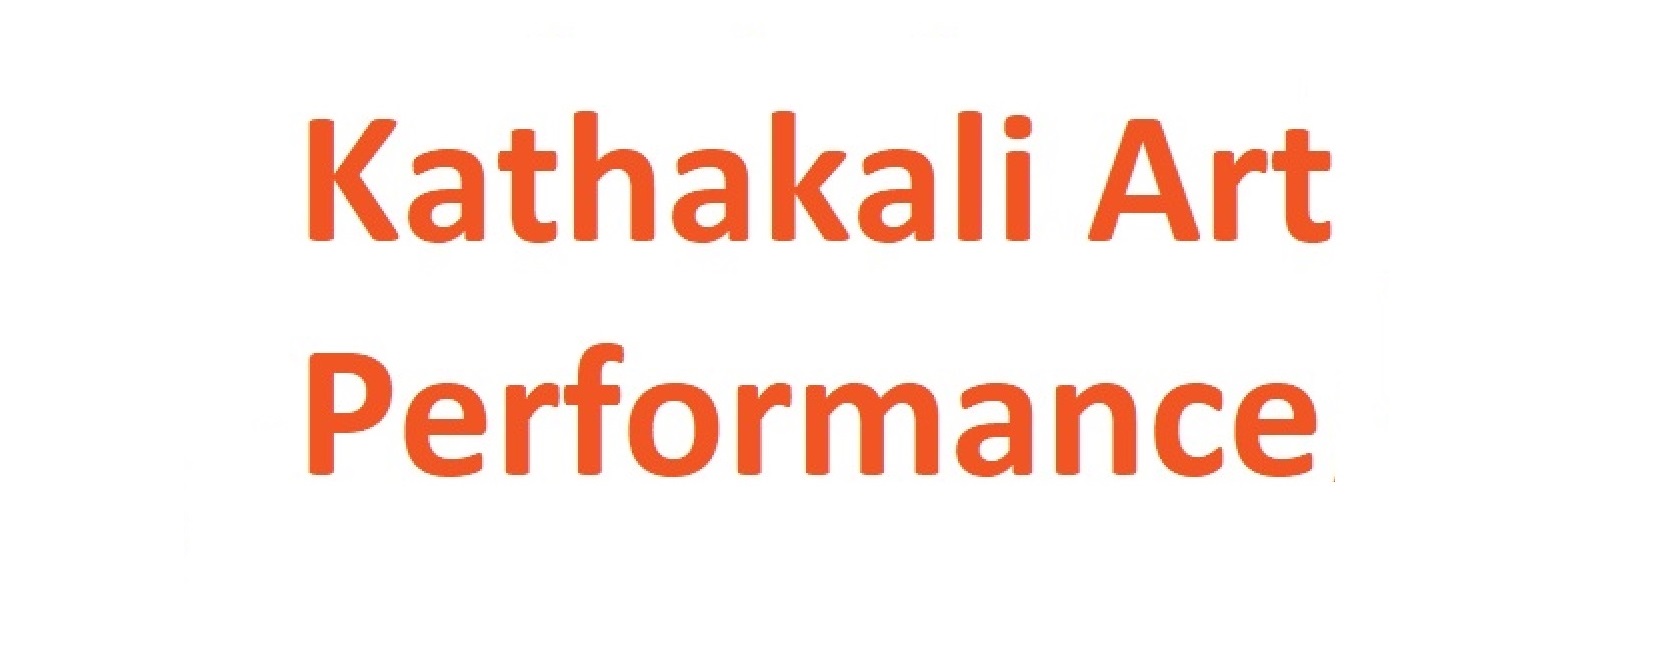 Watch Kathakali Art Performance in Kerala